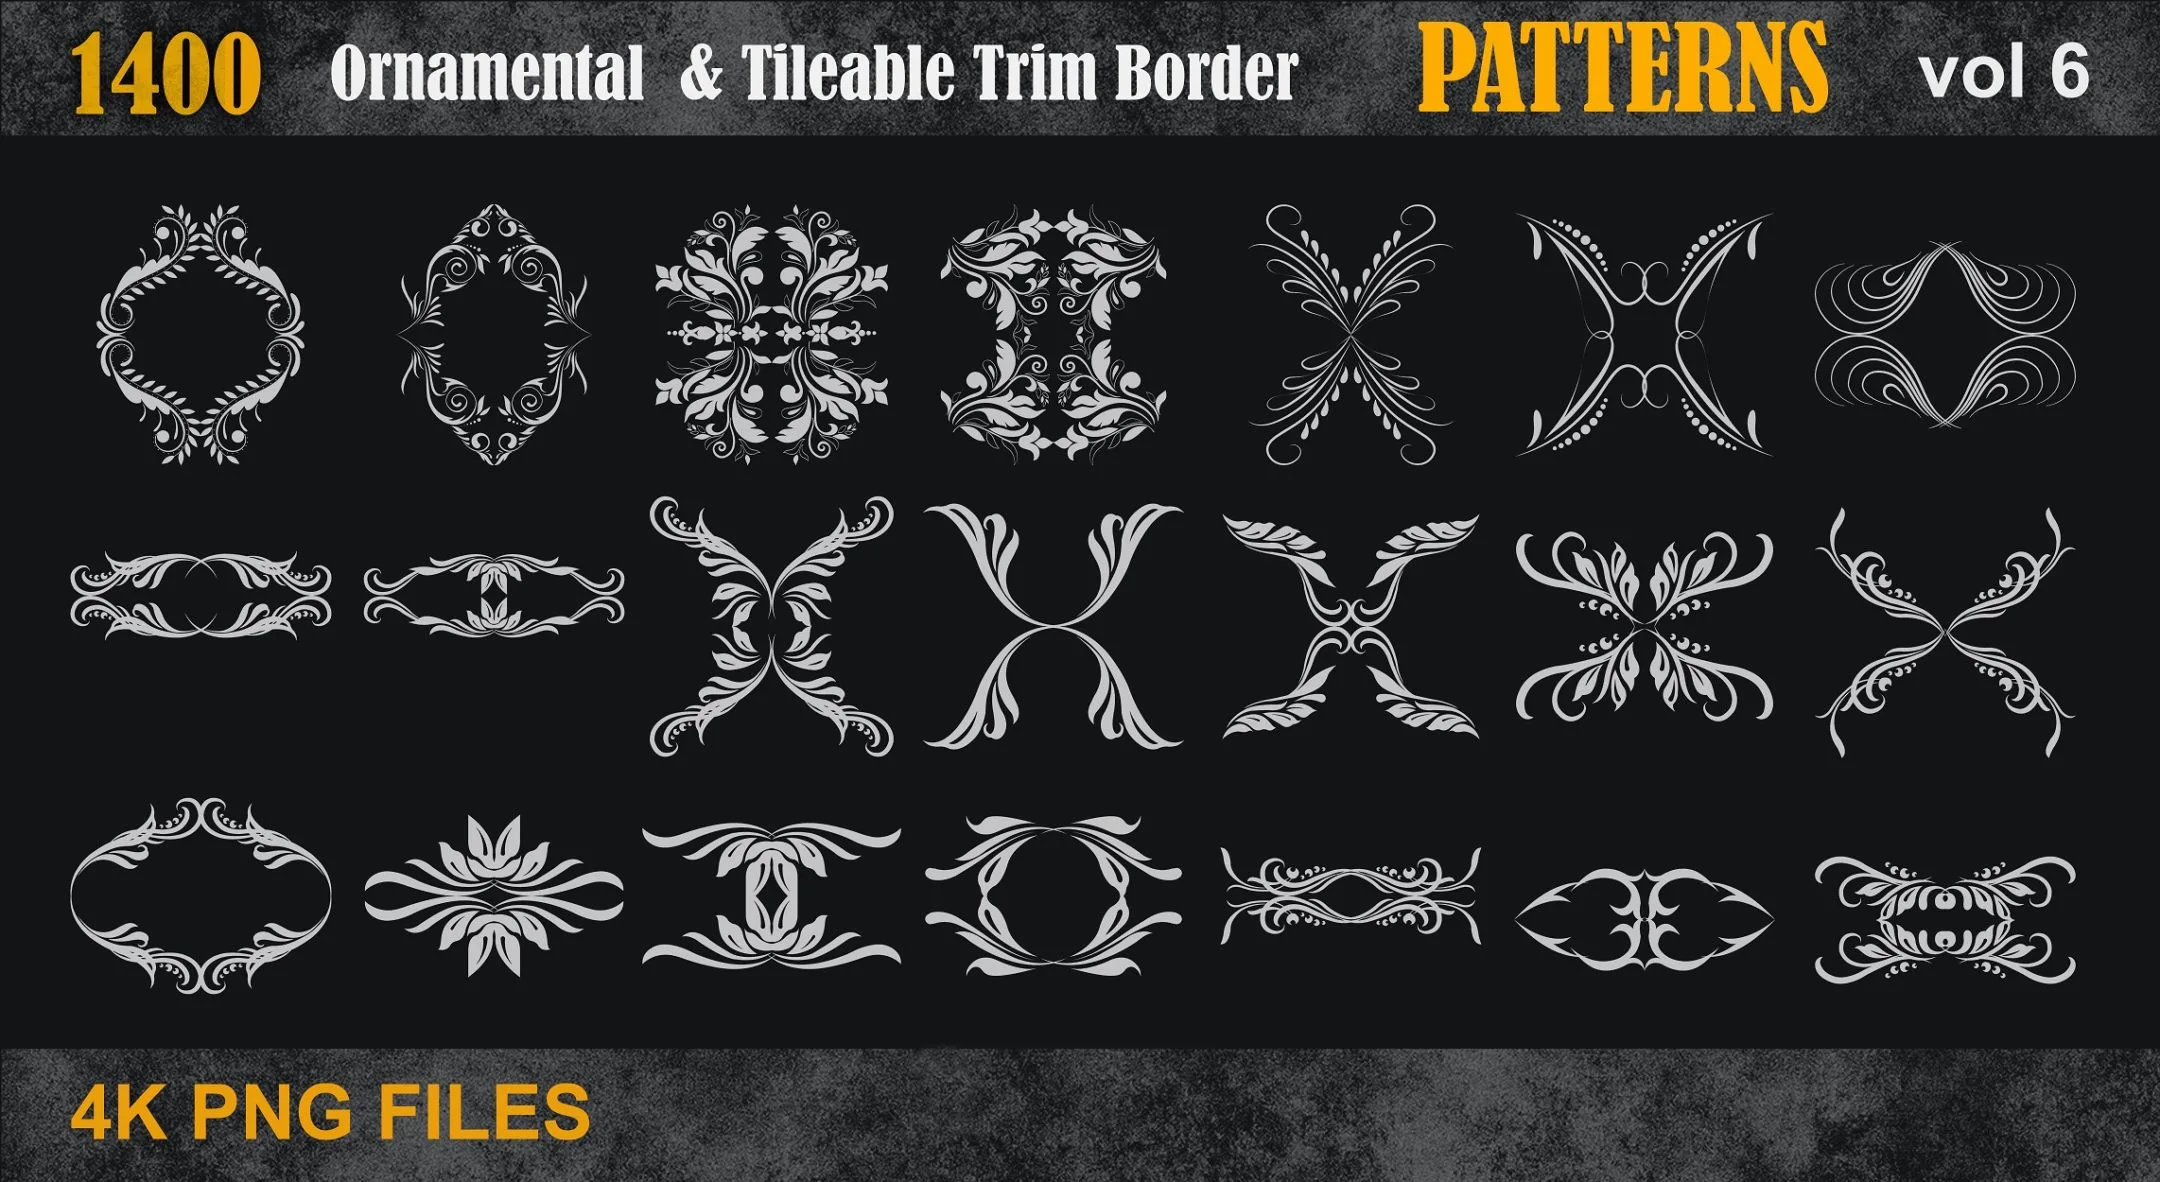 1400 Ornamental & Tileable Trim Border Patterns vol6